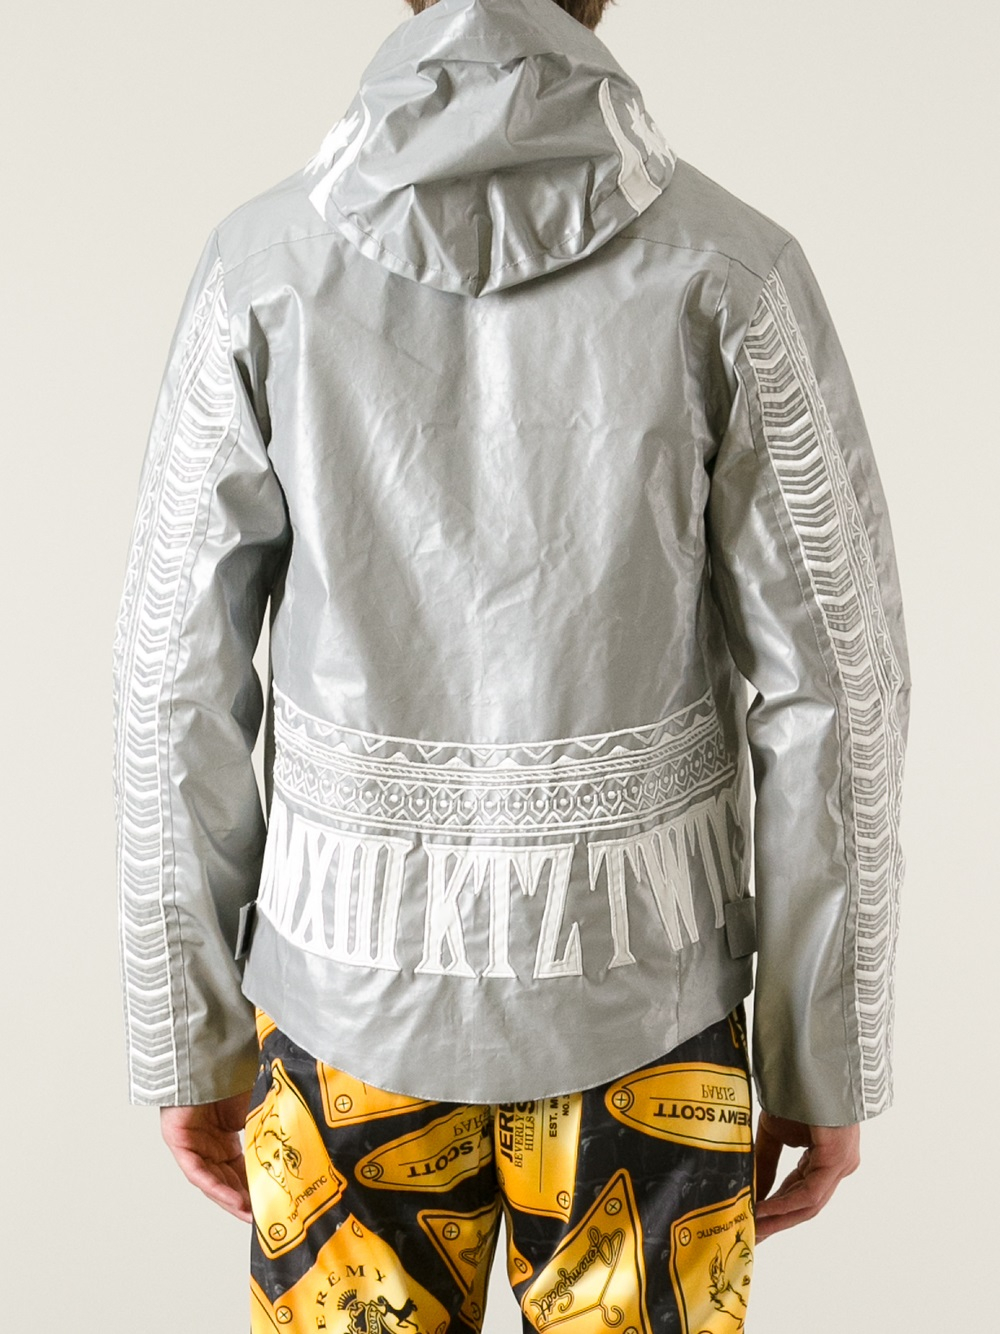 Lyst - Ktz Reflective Hooded Jacket in Metallic for Men